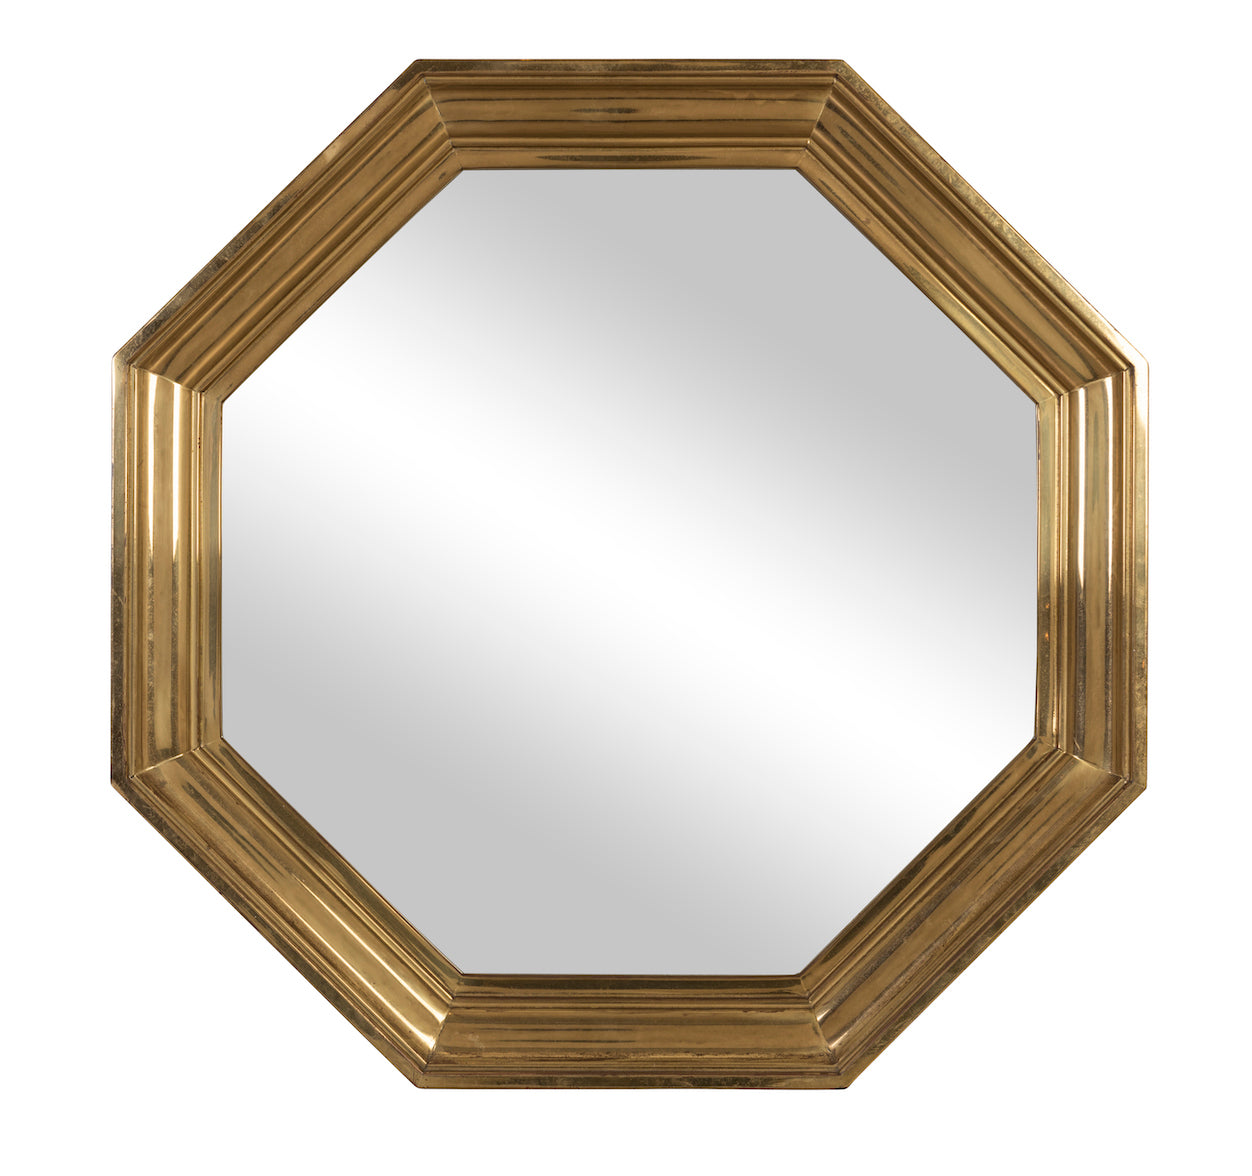 SOLD A stylish octagonal brass wall mirror, Spanish Circa 1950